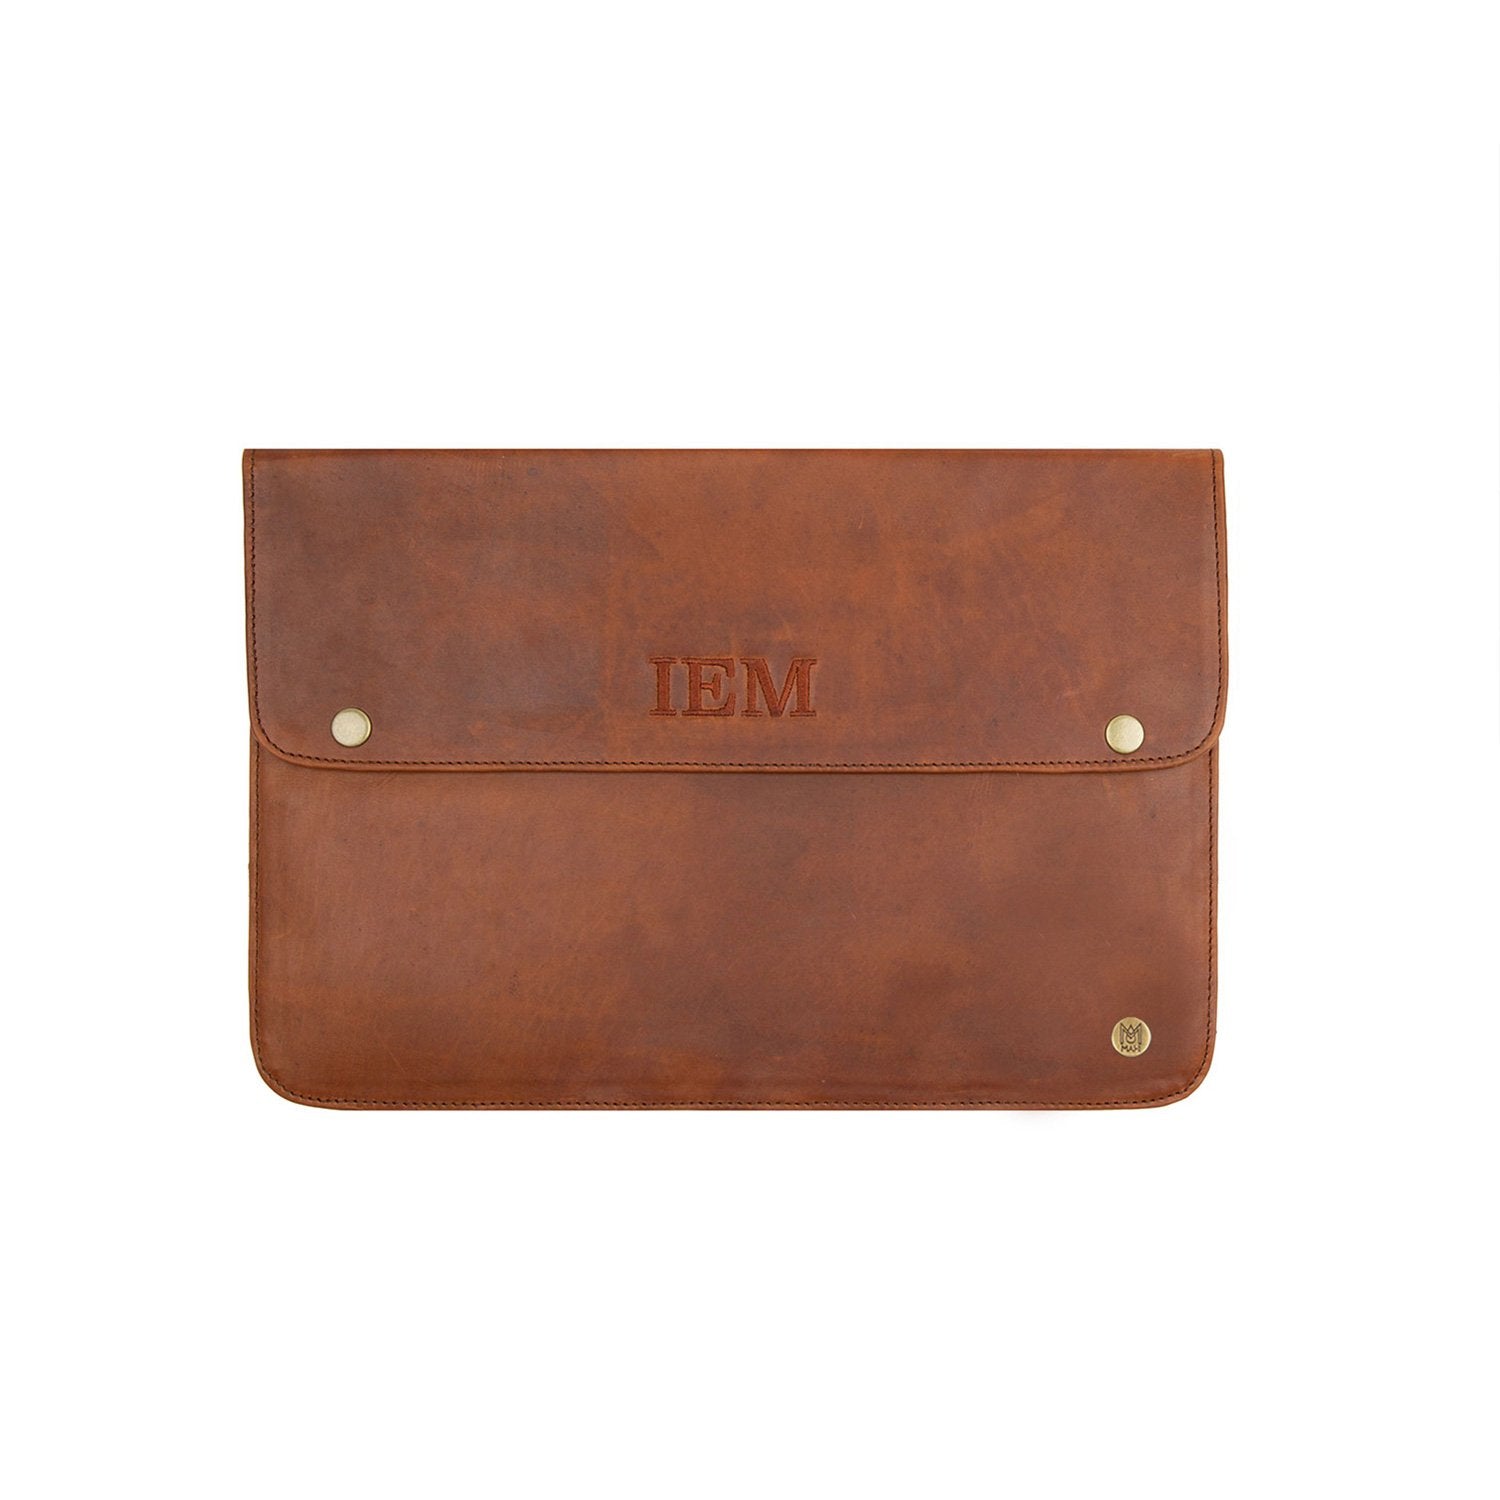 Leather Laptop Cases – MAHI Leather